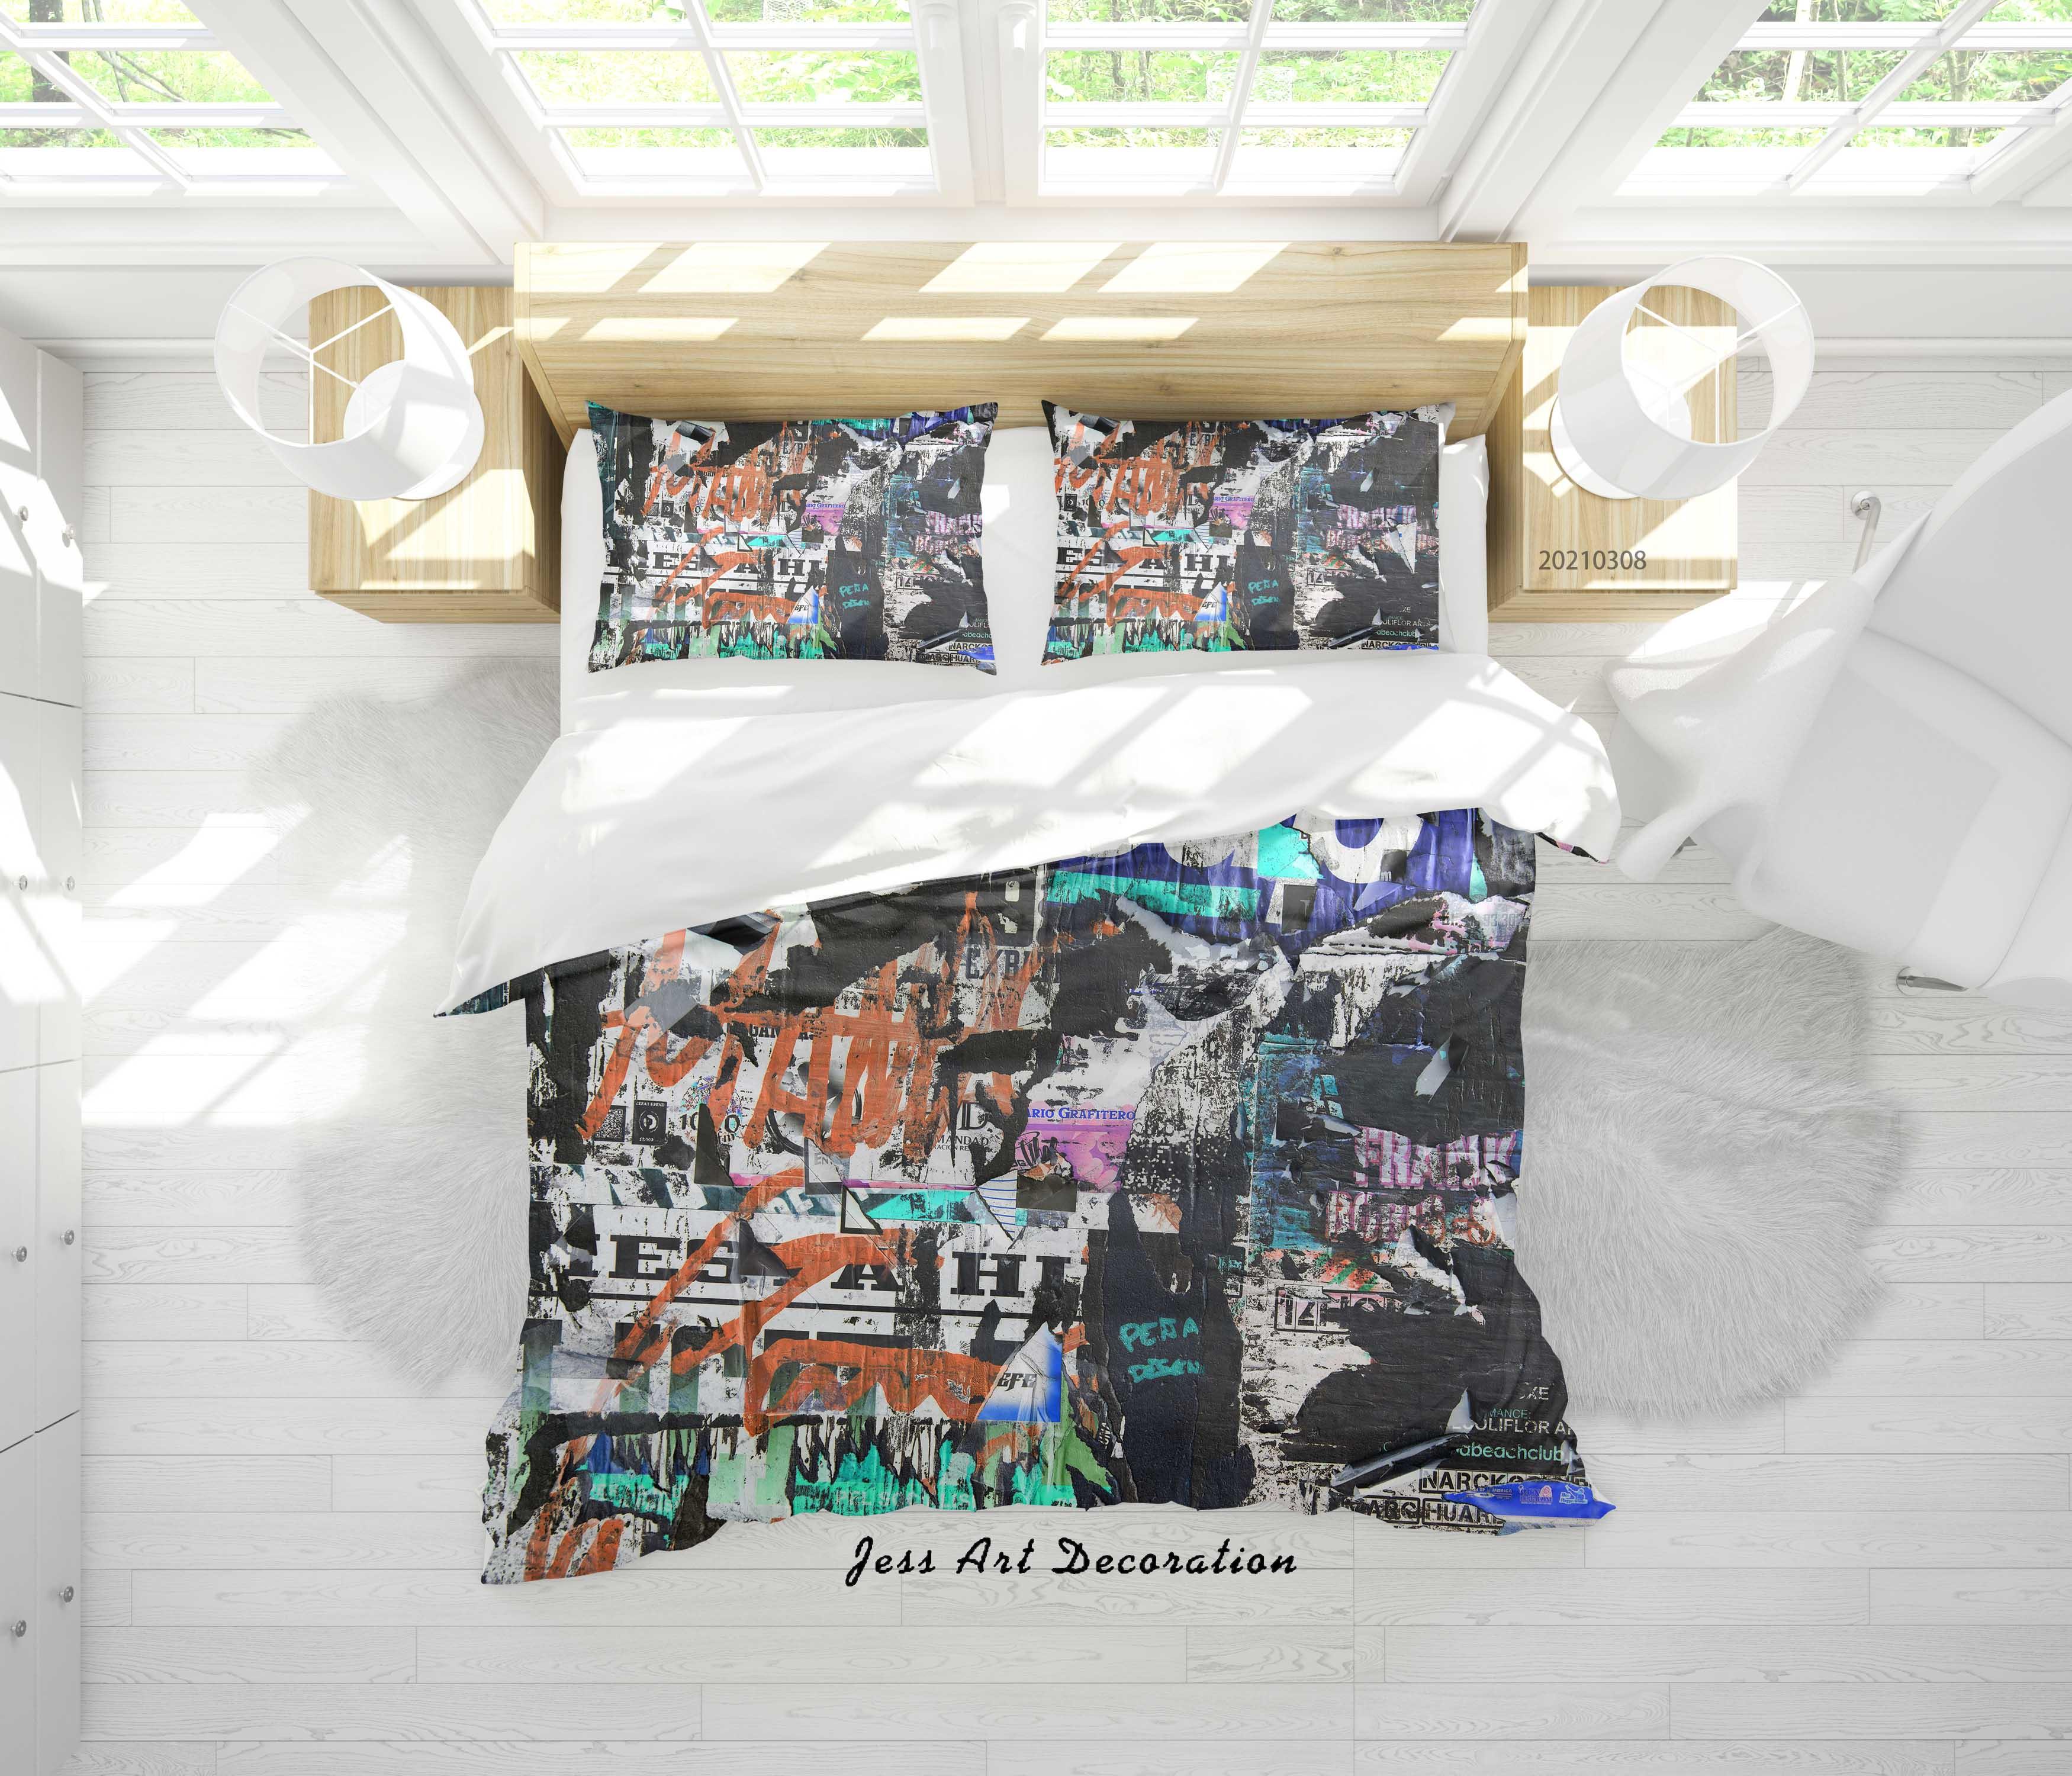 3D Abstract Black Graffiti Quilt Cover Set Bedding Set Duvet Cover Pillowcases 35- Jess Art Decoration